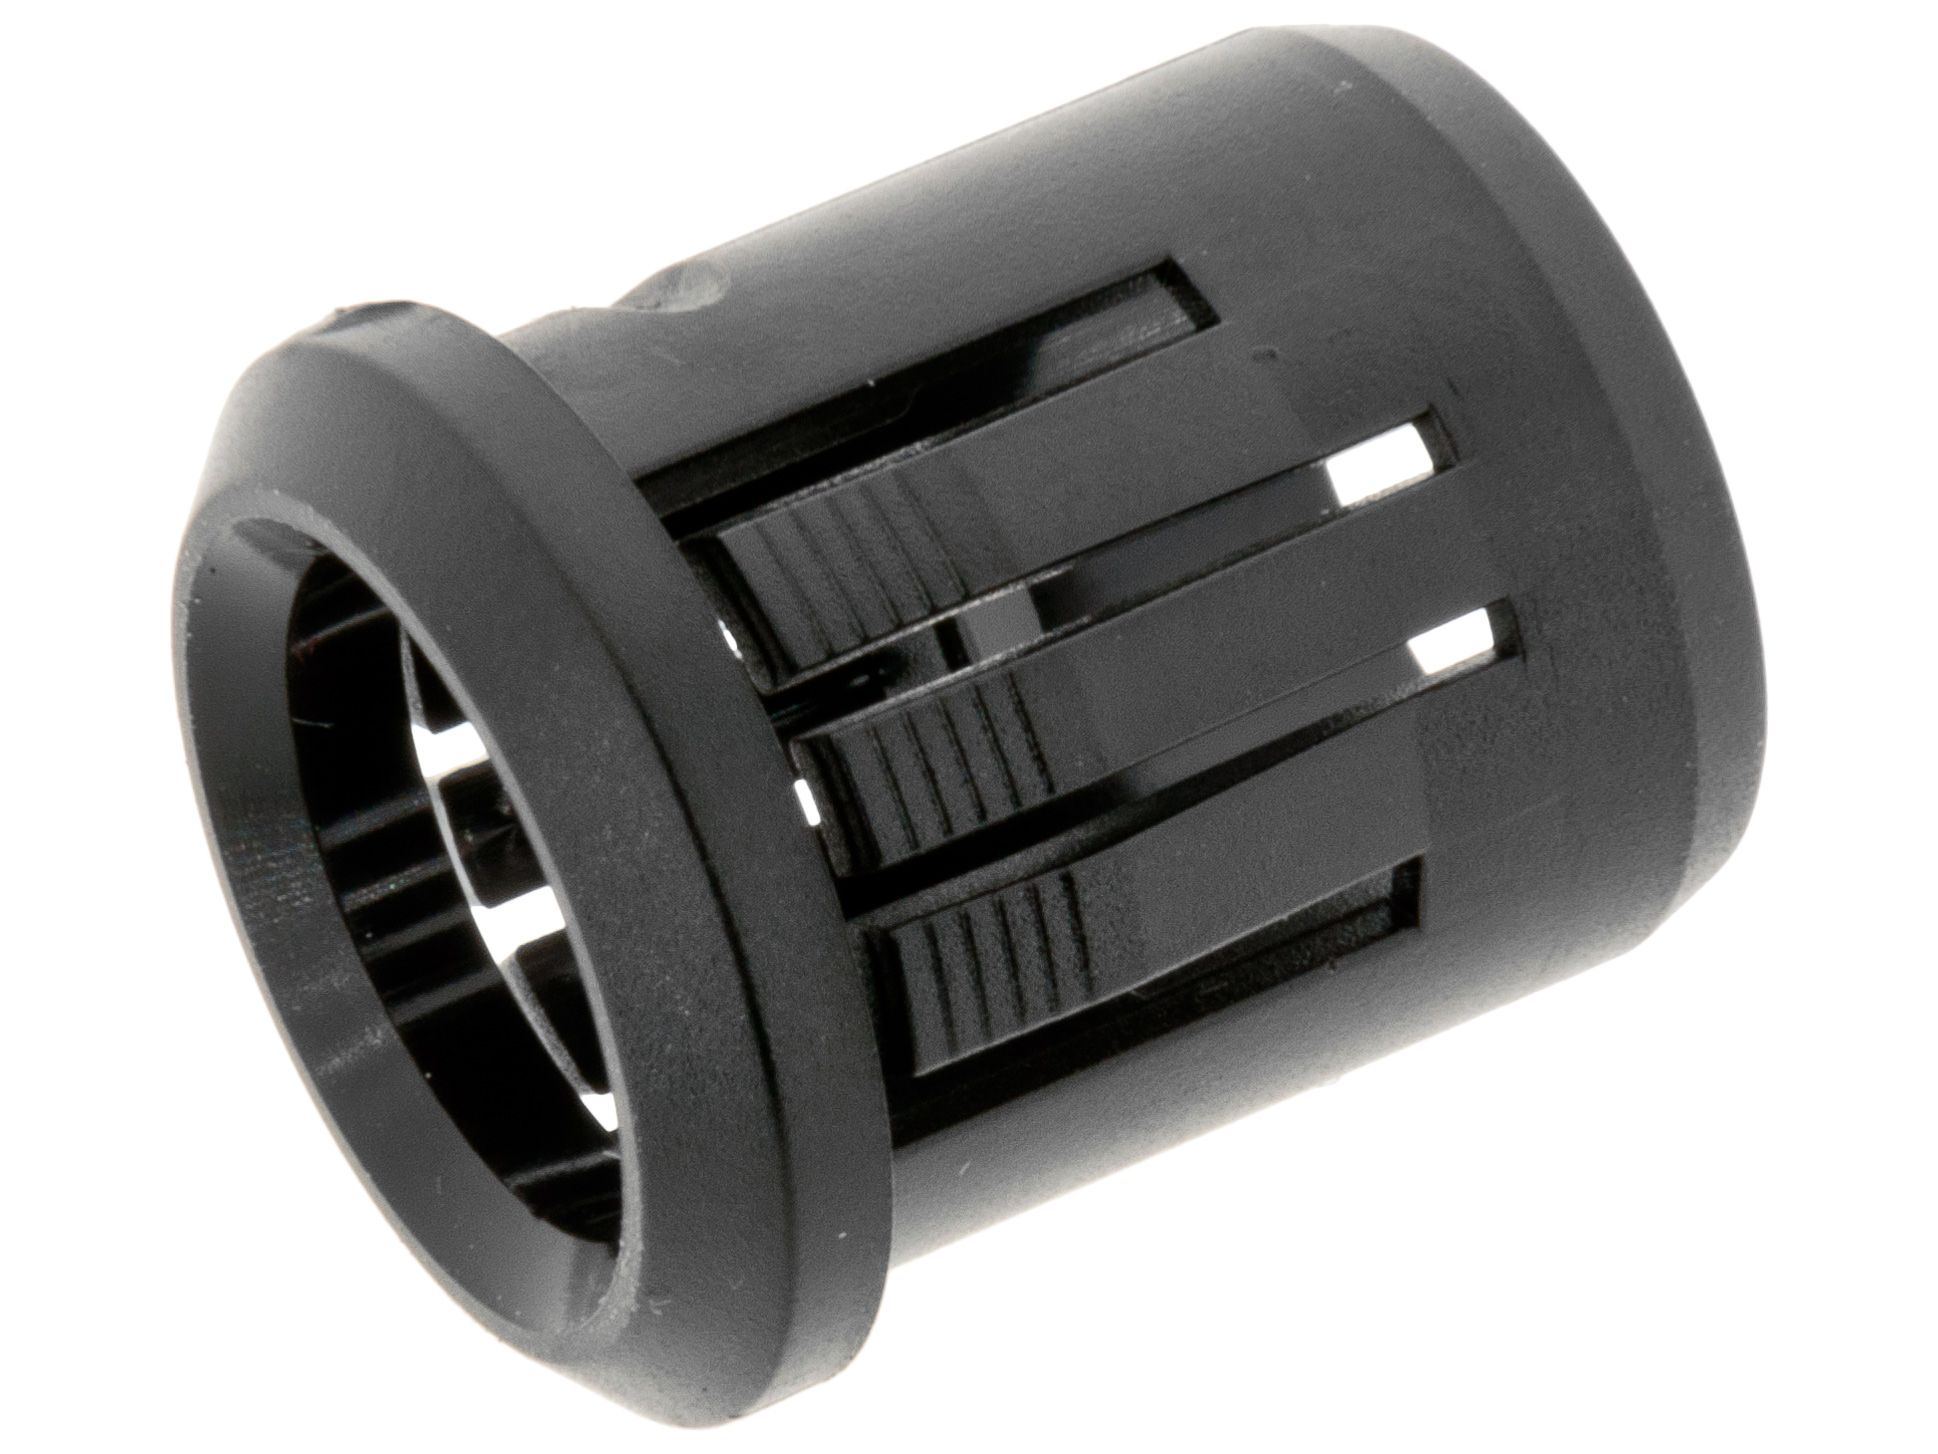 LED holder convex 10mm @ electrokit